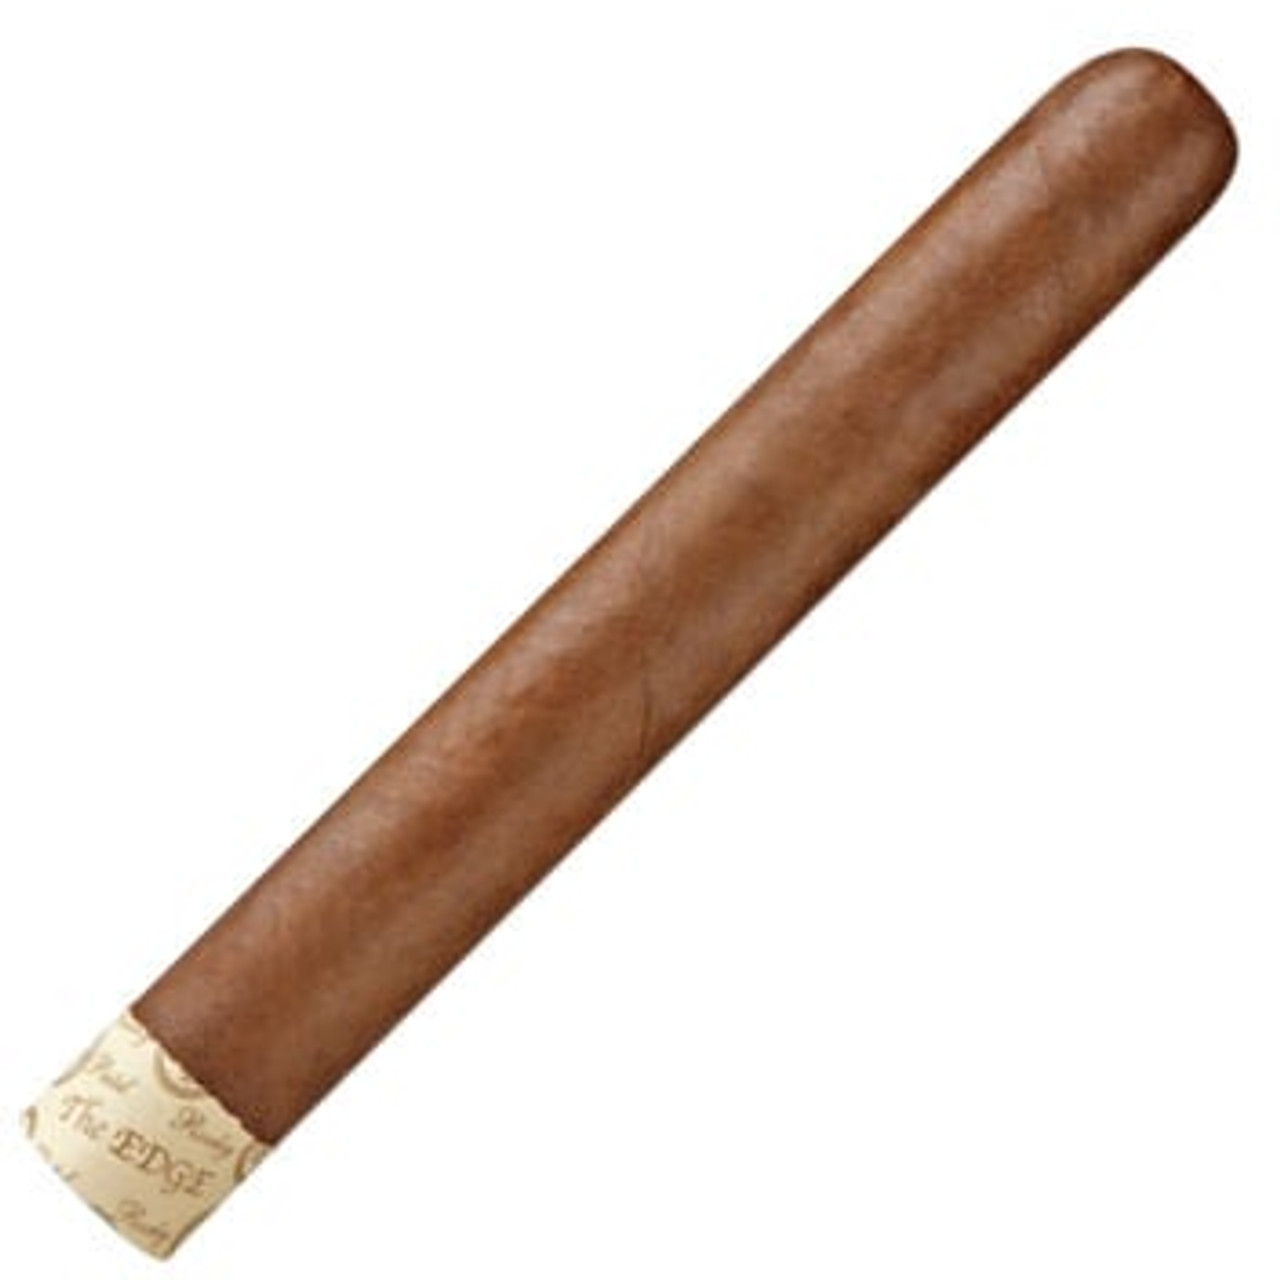 Rocky Patel The Edge Corojo Toro Cigars - 6 x 52 Single